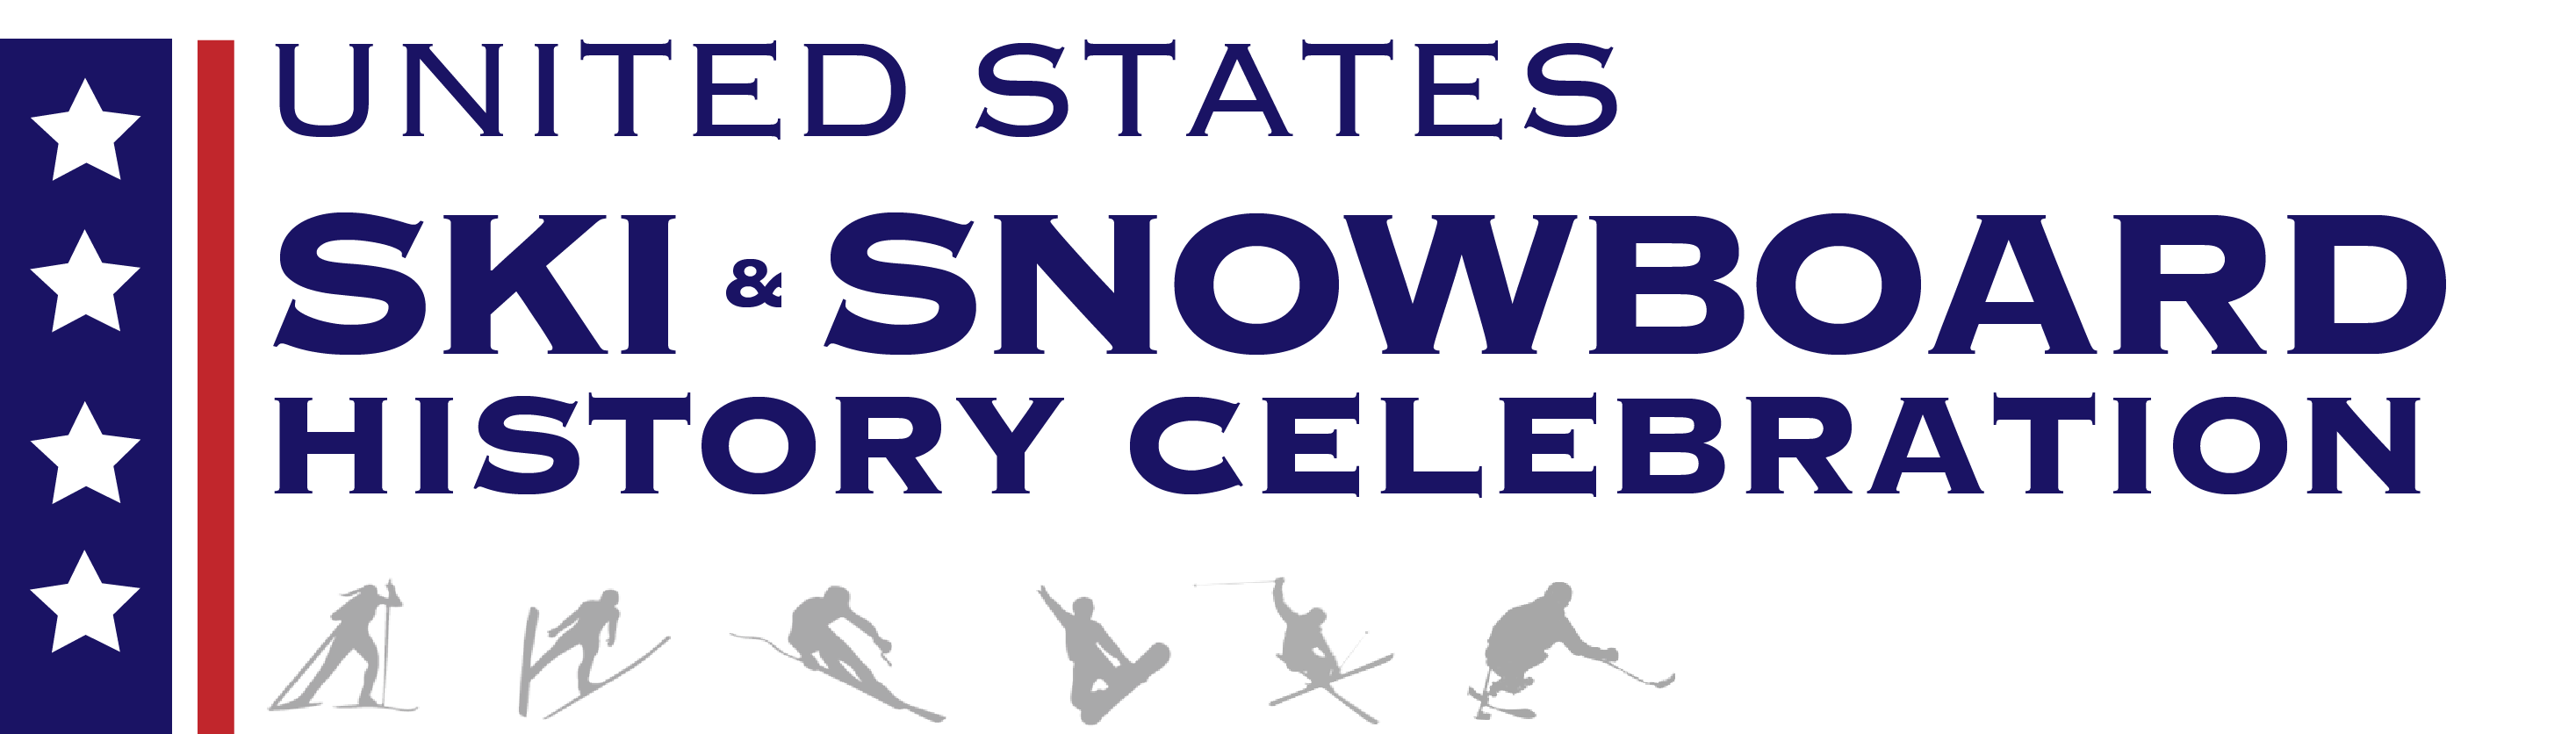 Skiing History week logo